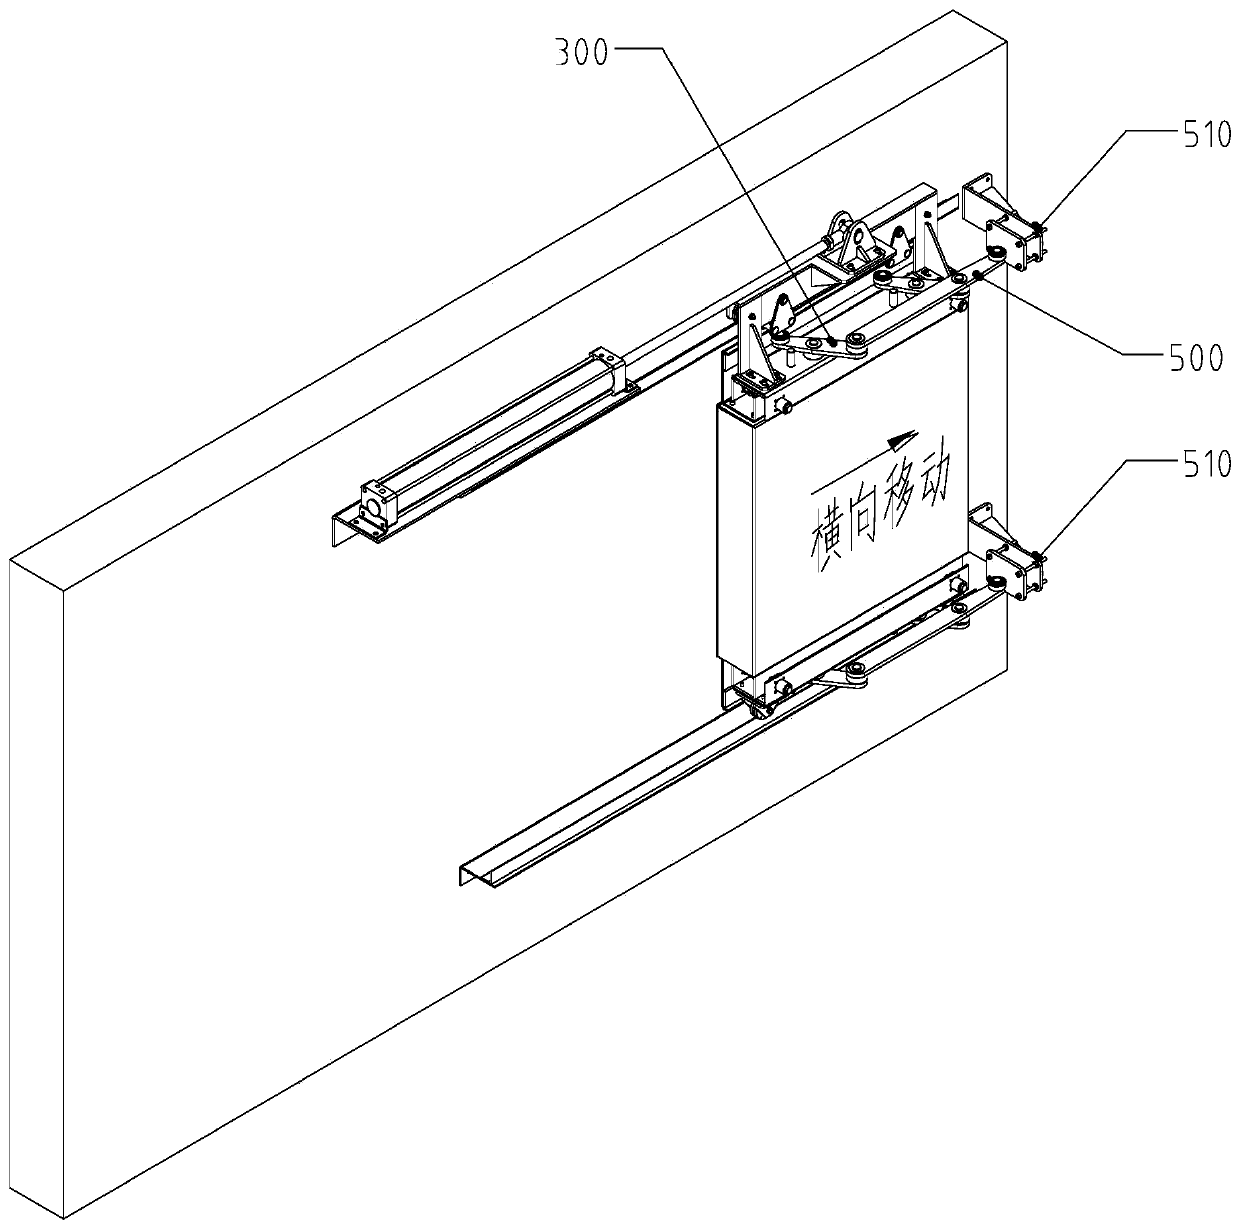 Mechanical press-bar type translation door sealing structure